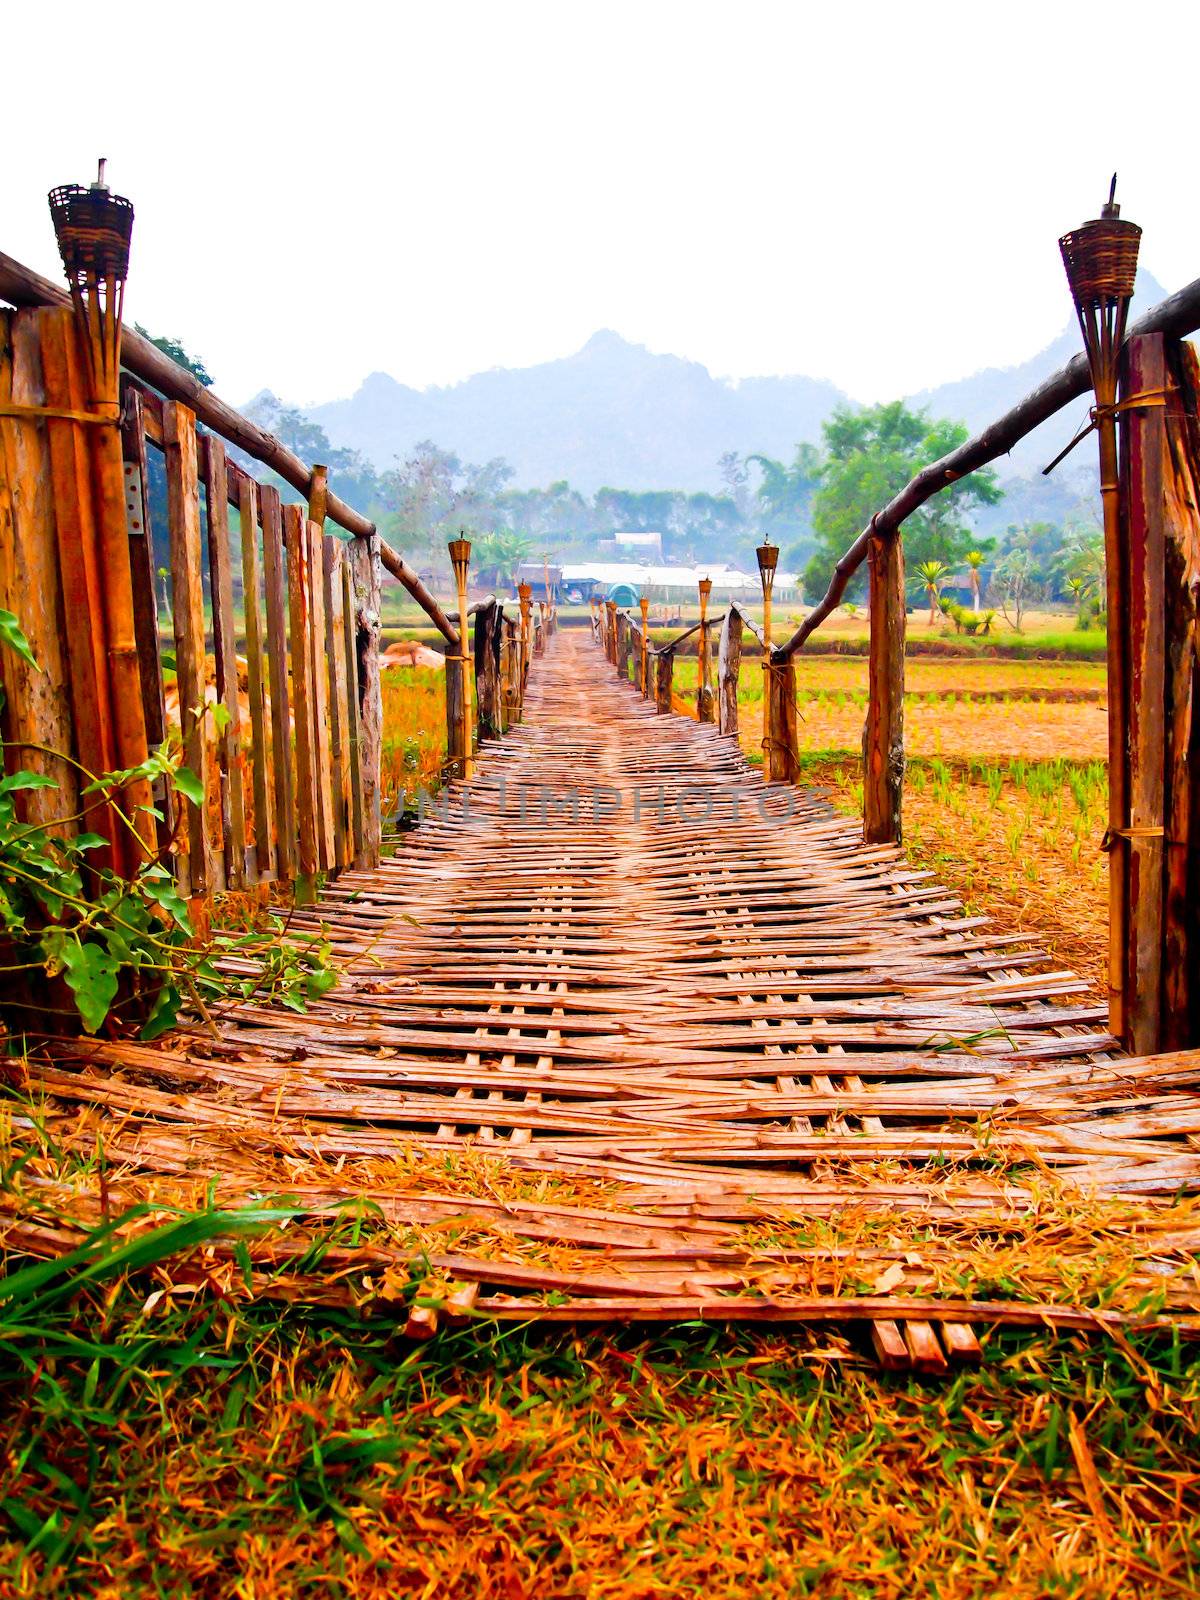 Bamboo bridge2 by gjeerawut